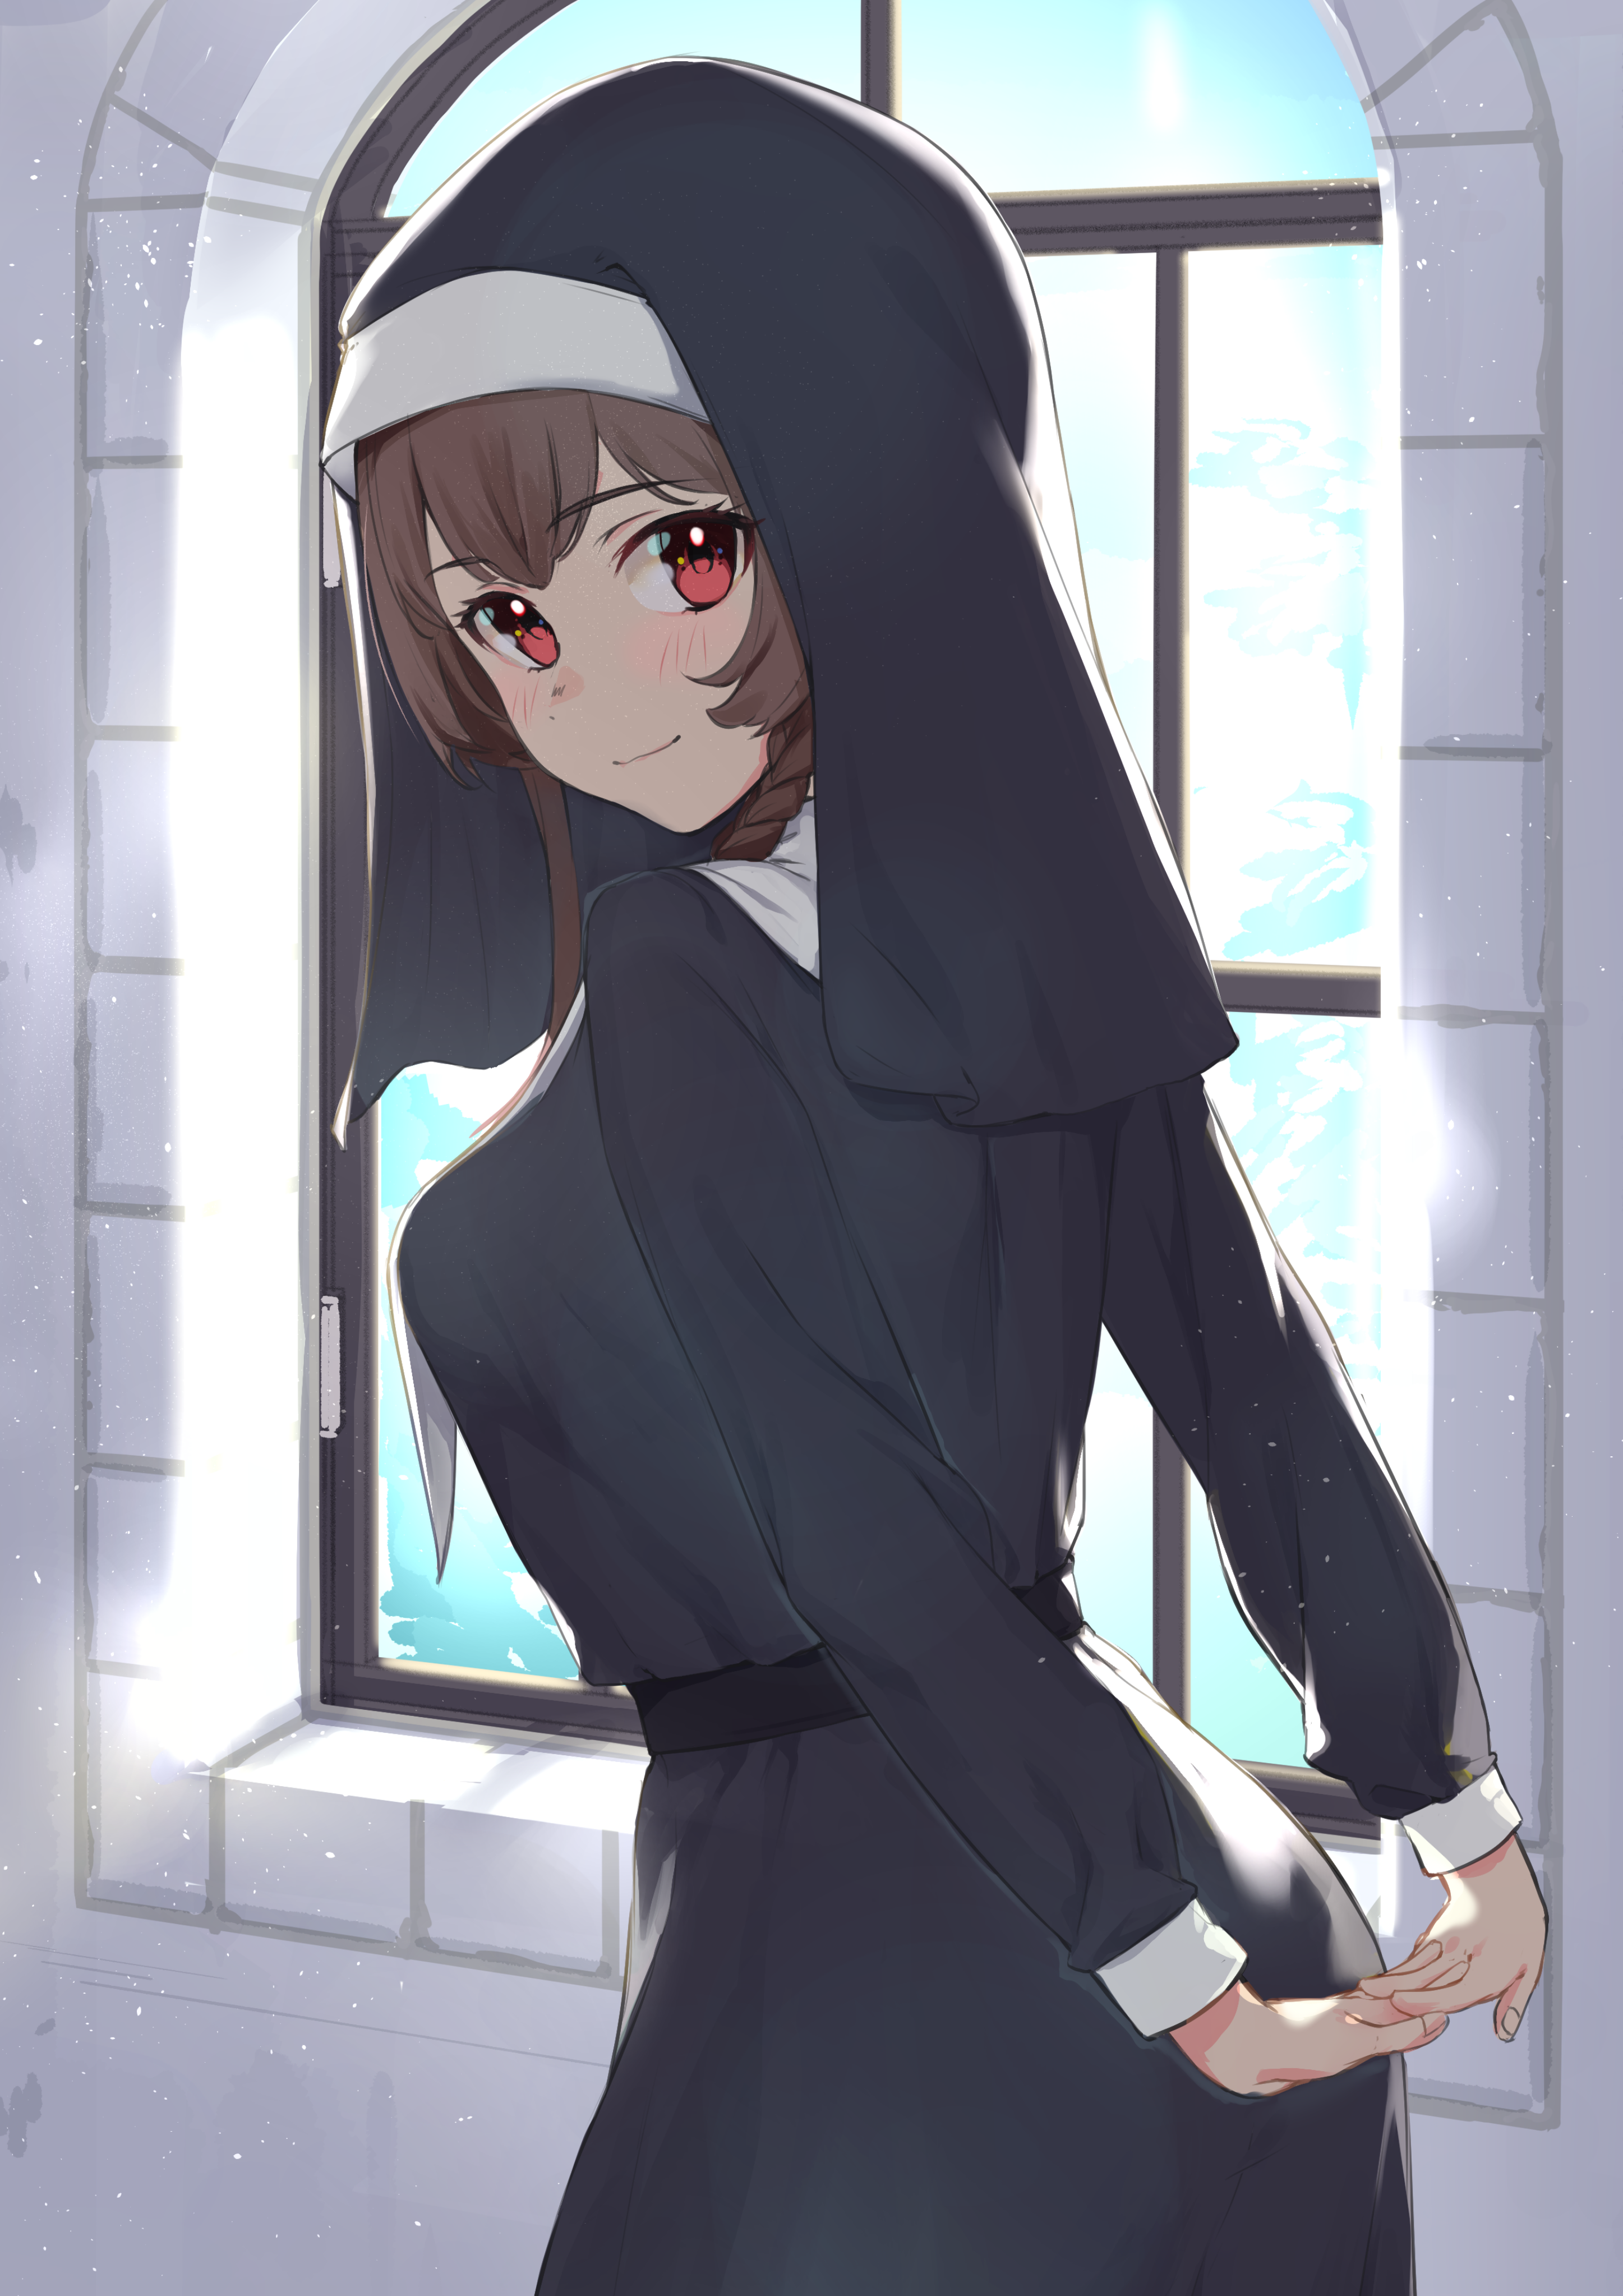 Anime 2894x4093 anime anime girls nuns nun outfit original characters artwork digital art fan art